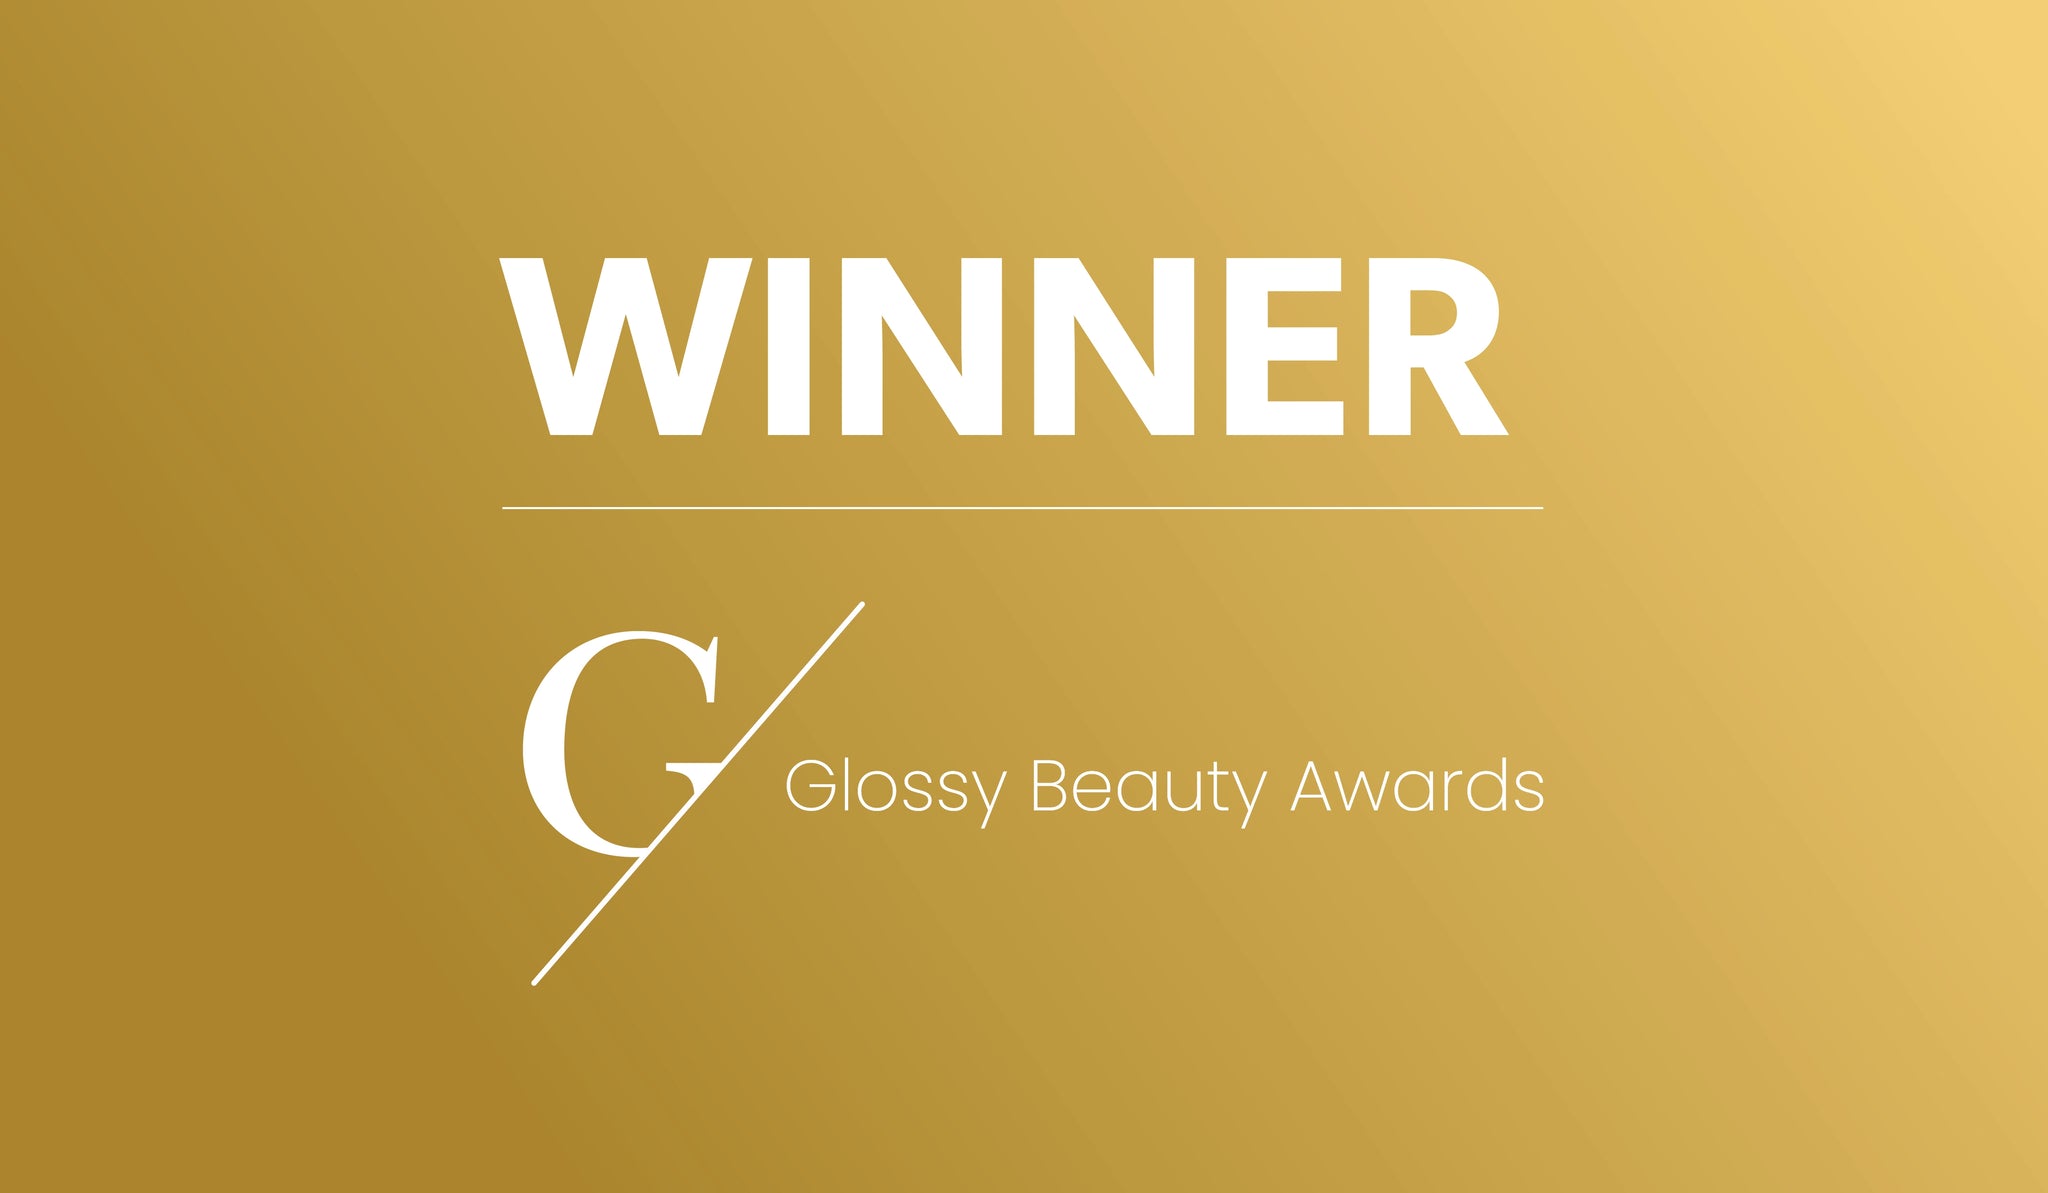 Glossy Beauty Awards Winner Seal 2022